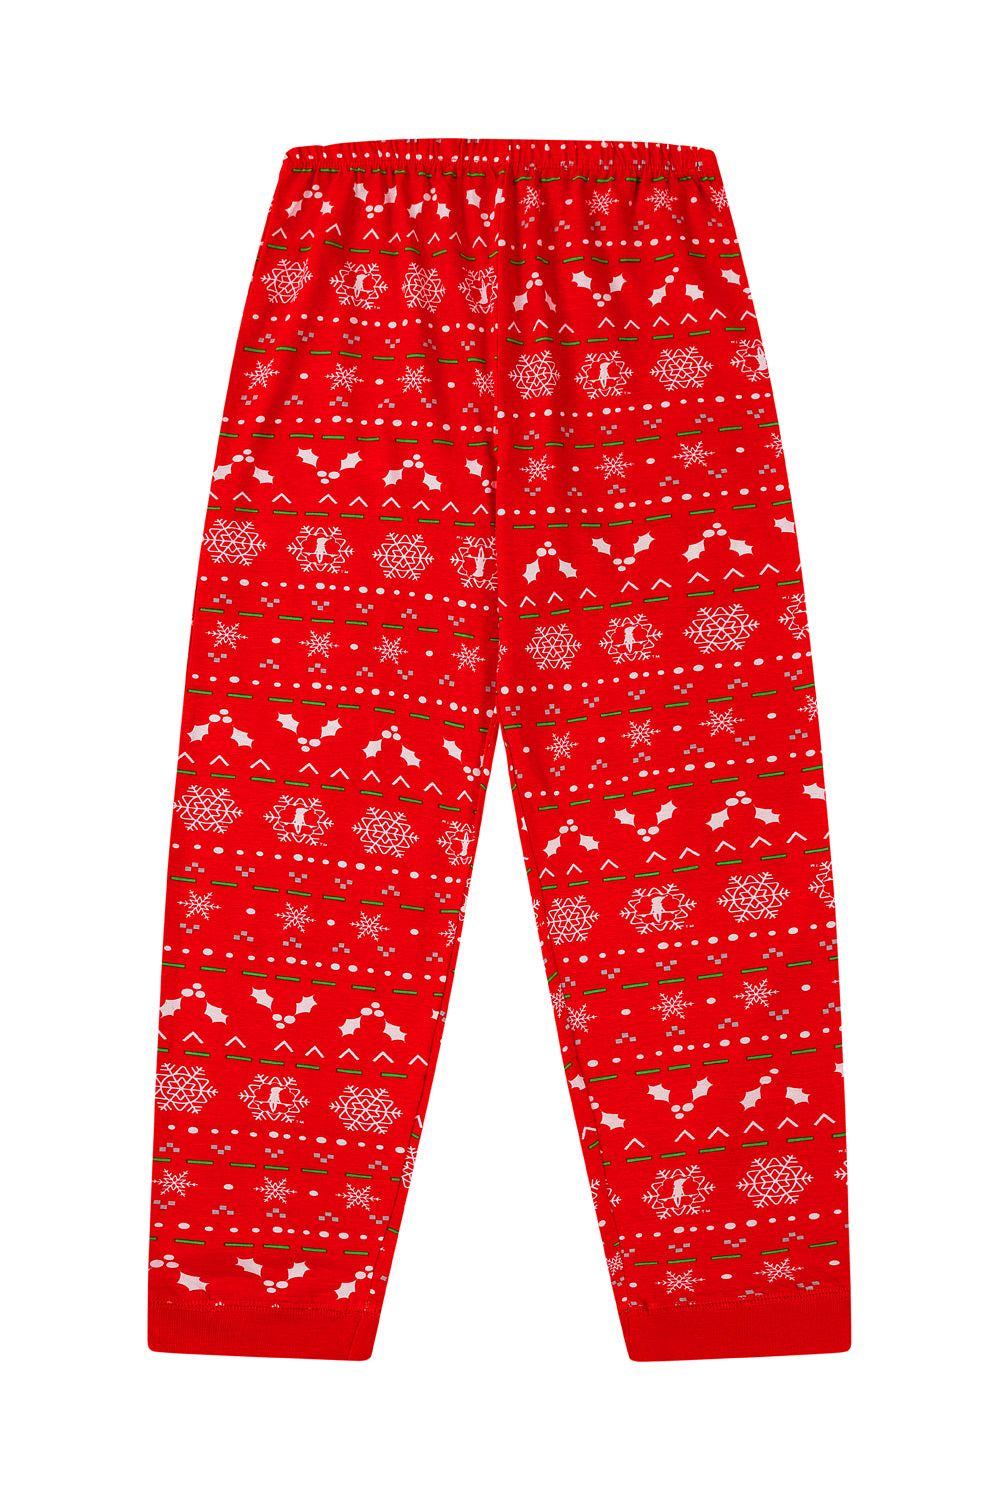 Official Elf on The Shelf Believe Christmas Matching Family Red White Pyjamas - Pyjamas.com